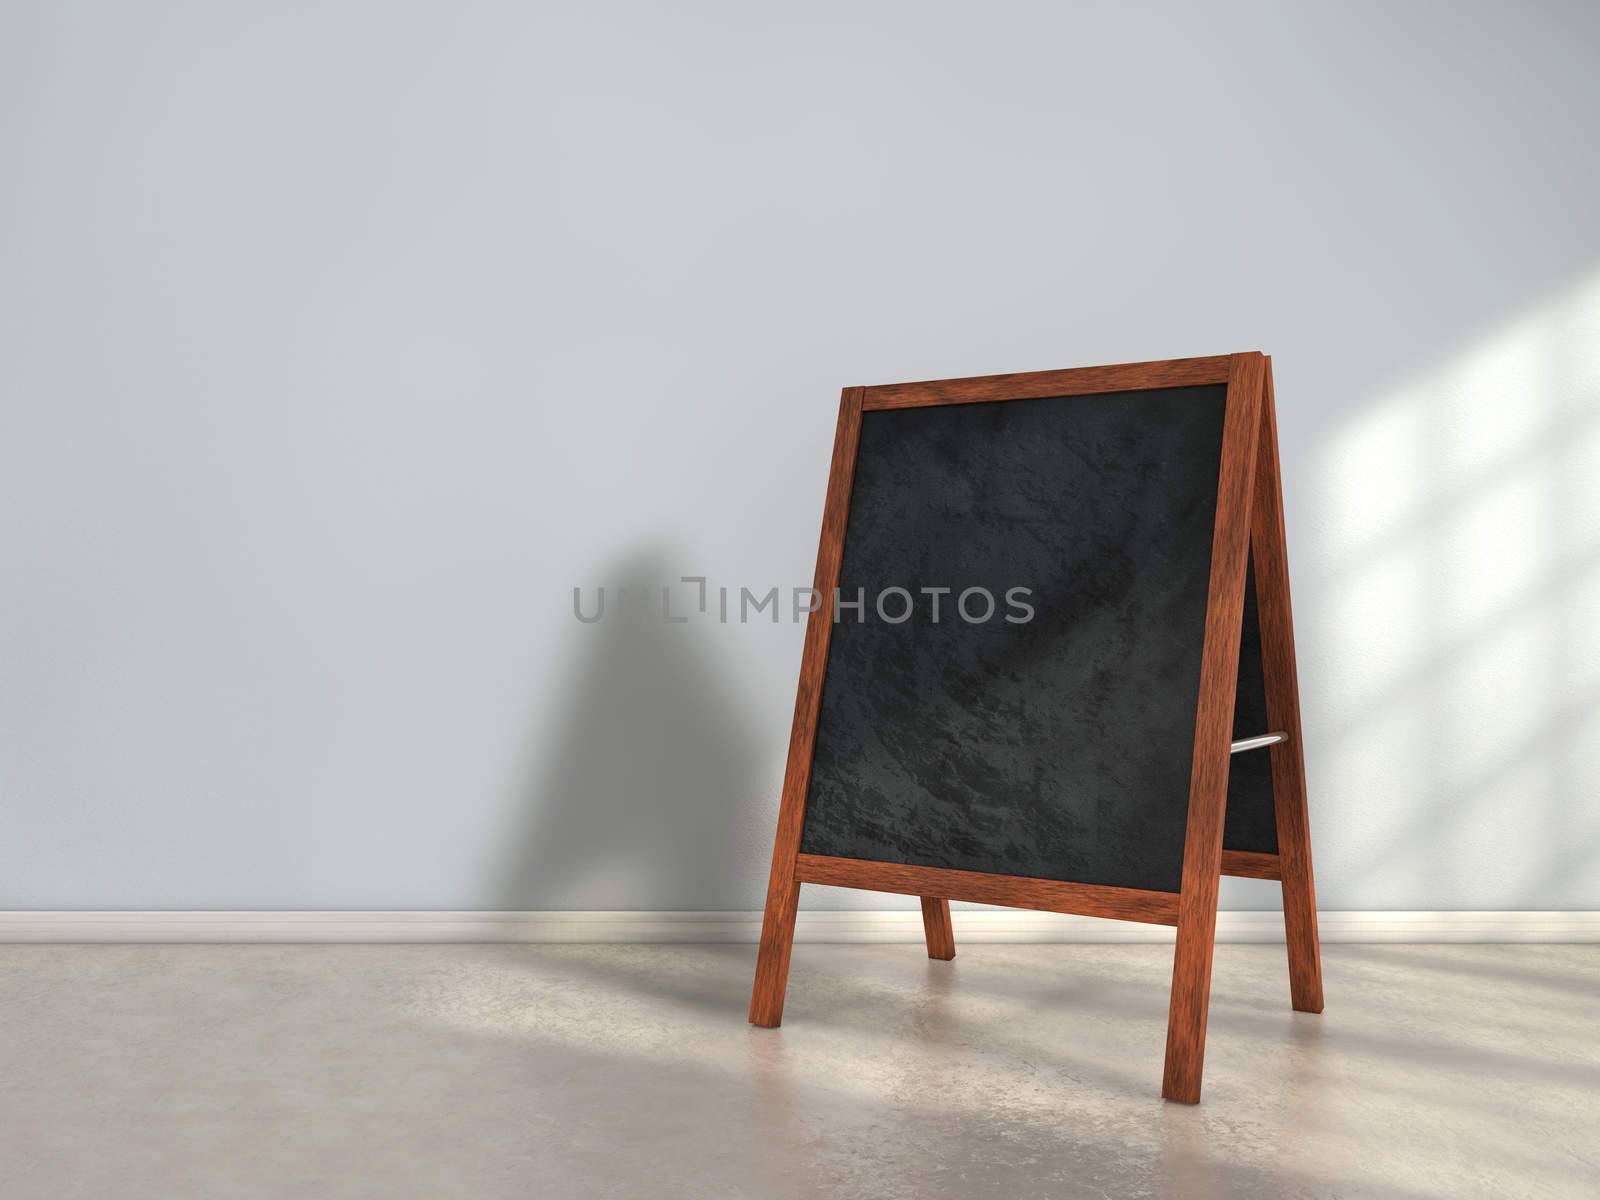 Blackboard menu by dynamicfoto